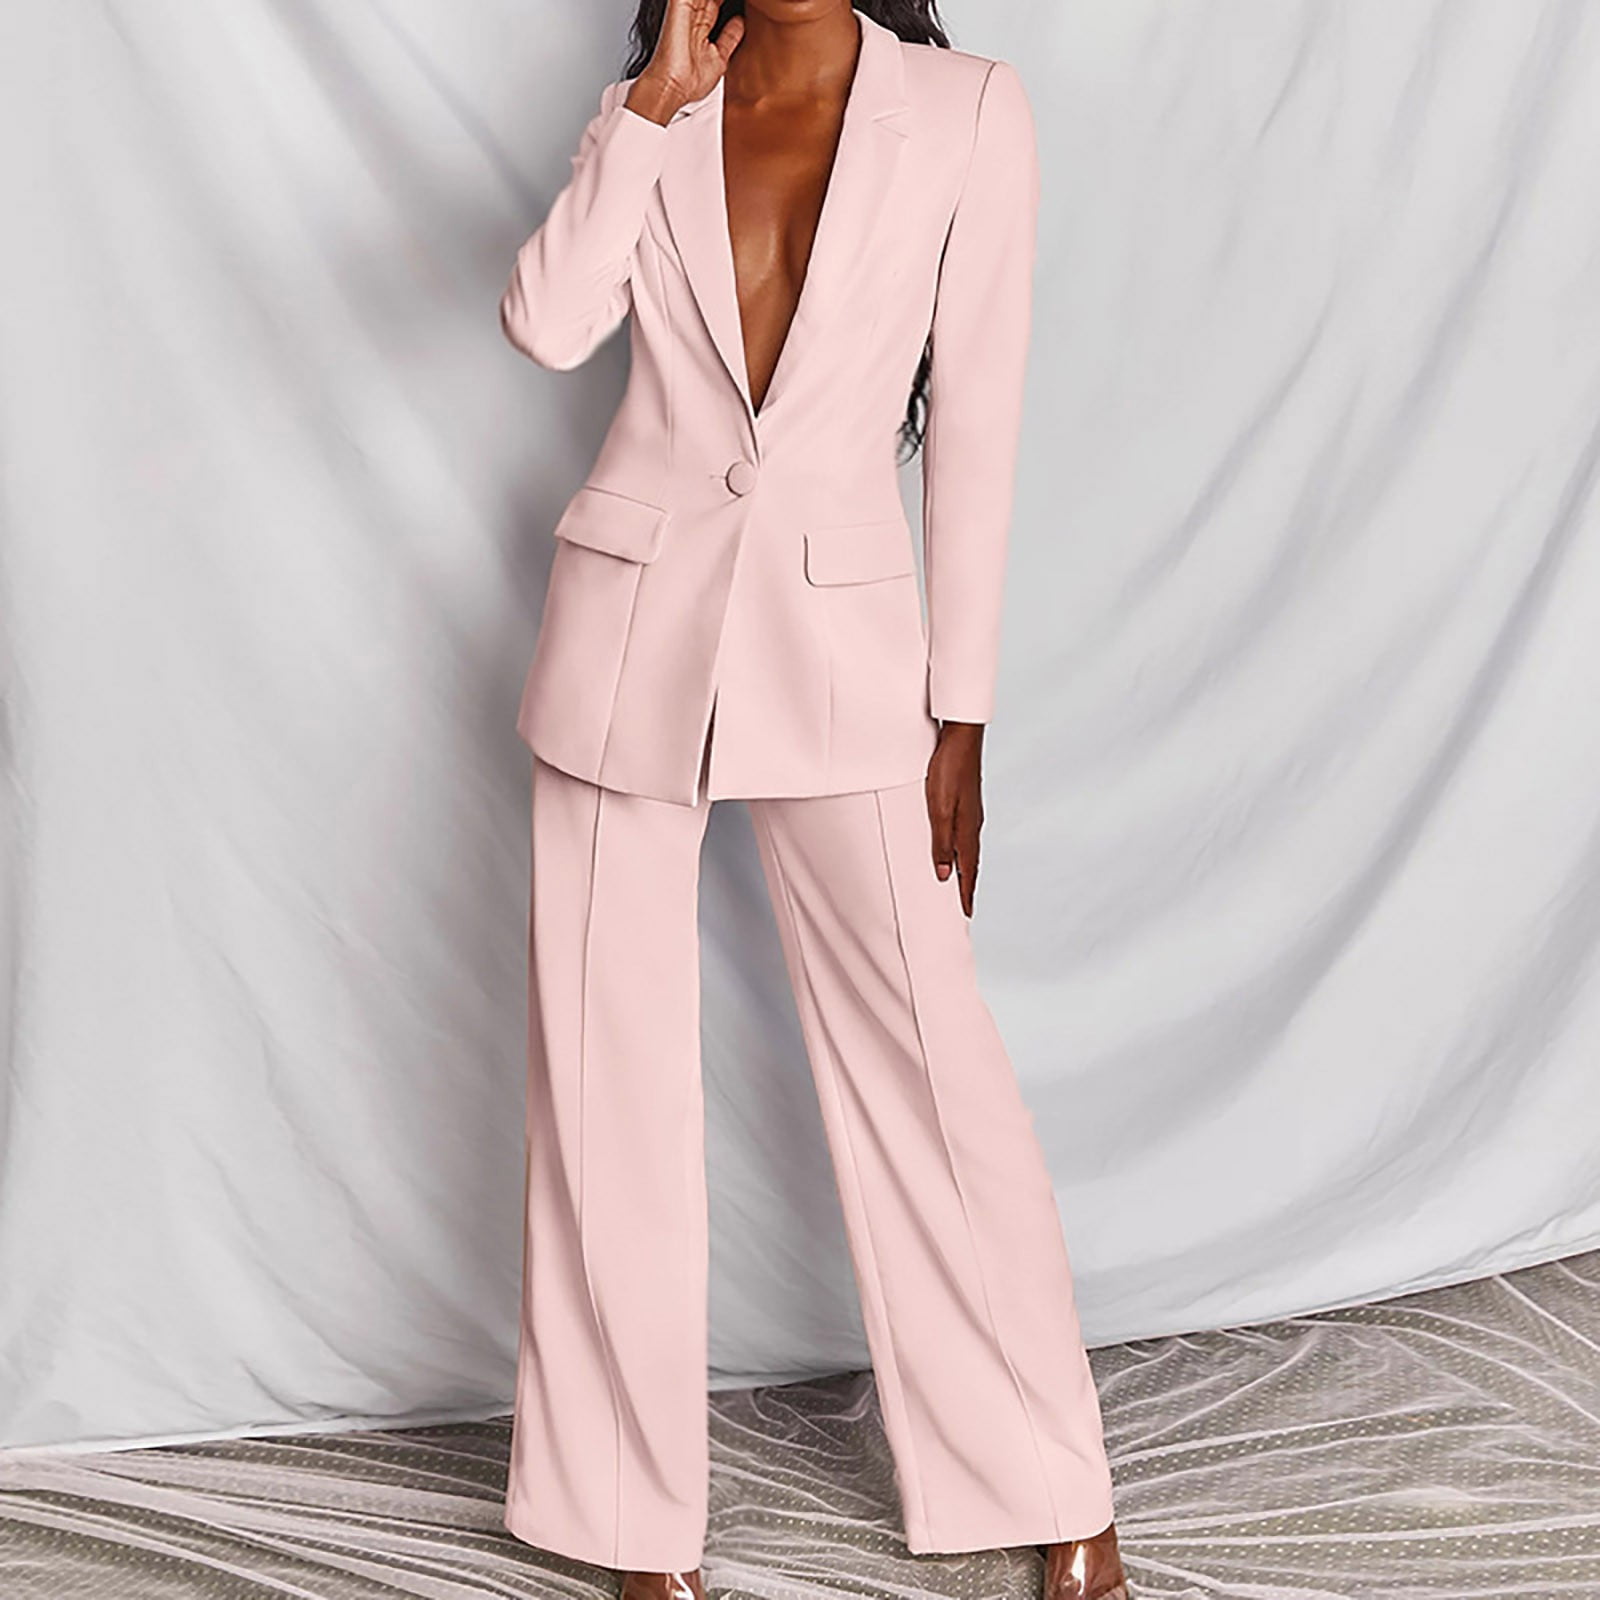 Women Suits - Formal & Business Suits for Ladies | FashionByTeresa-tmf.edu.vn